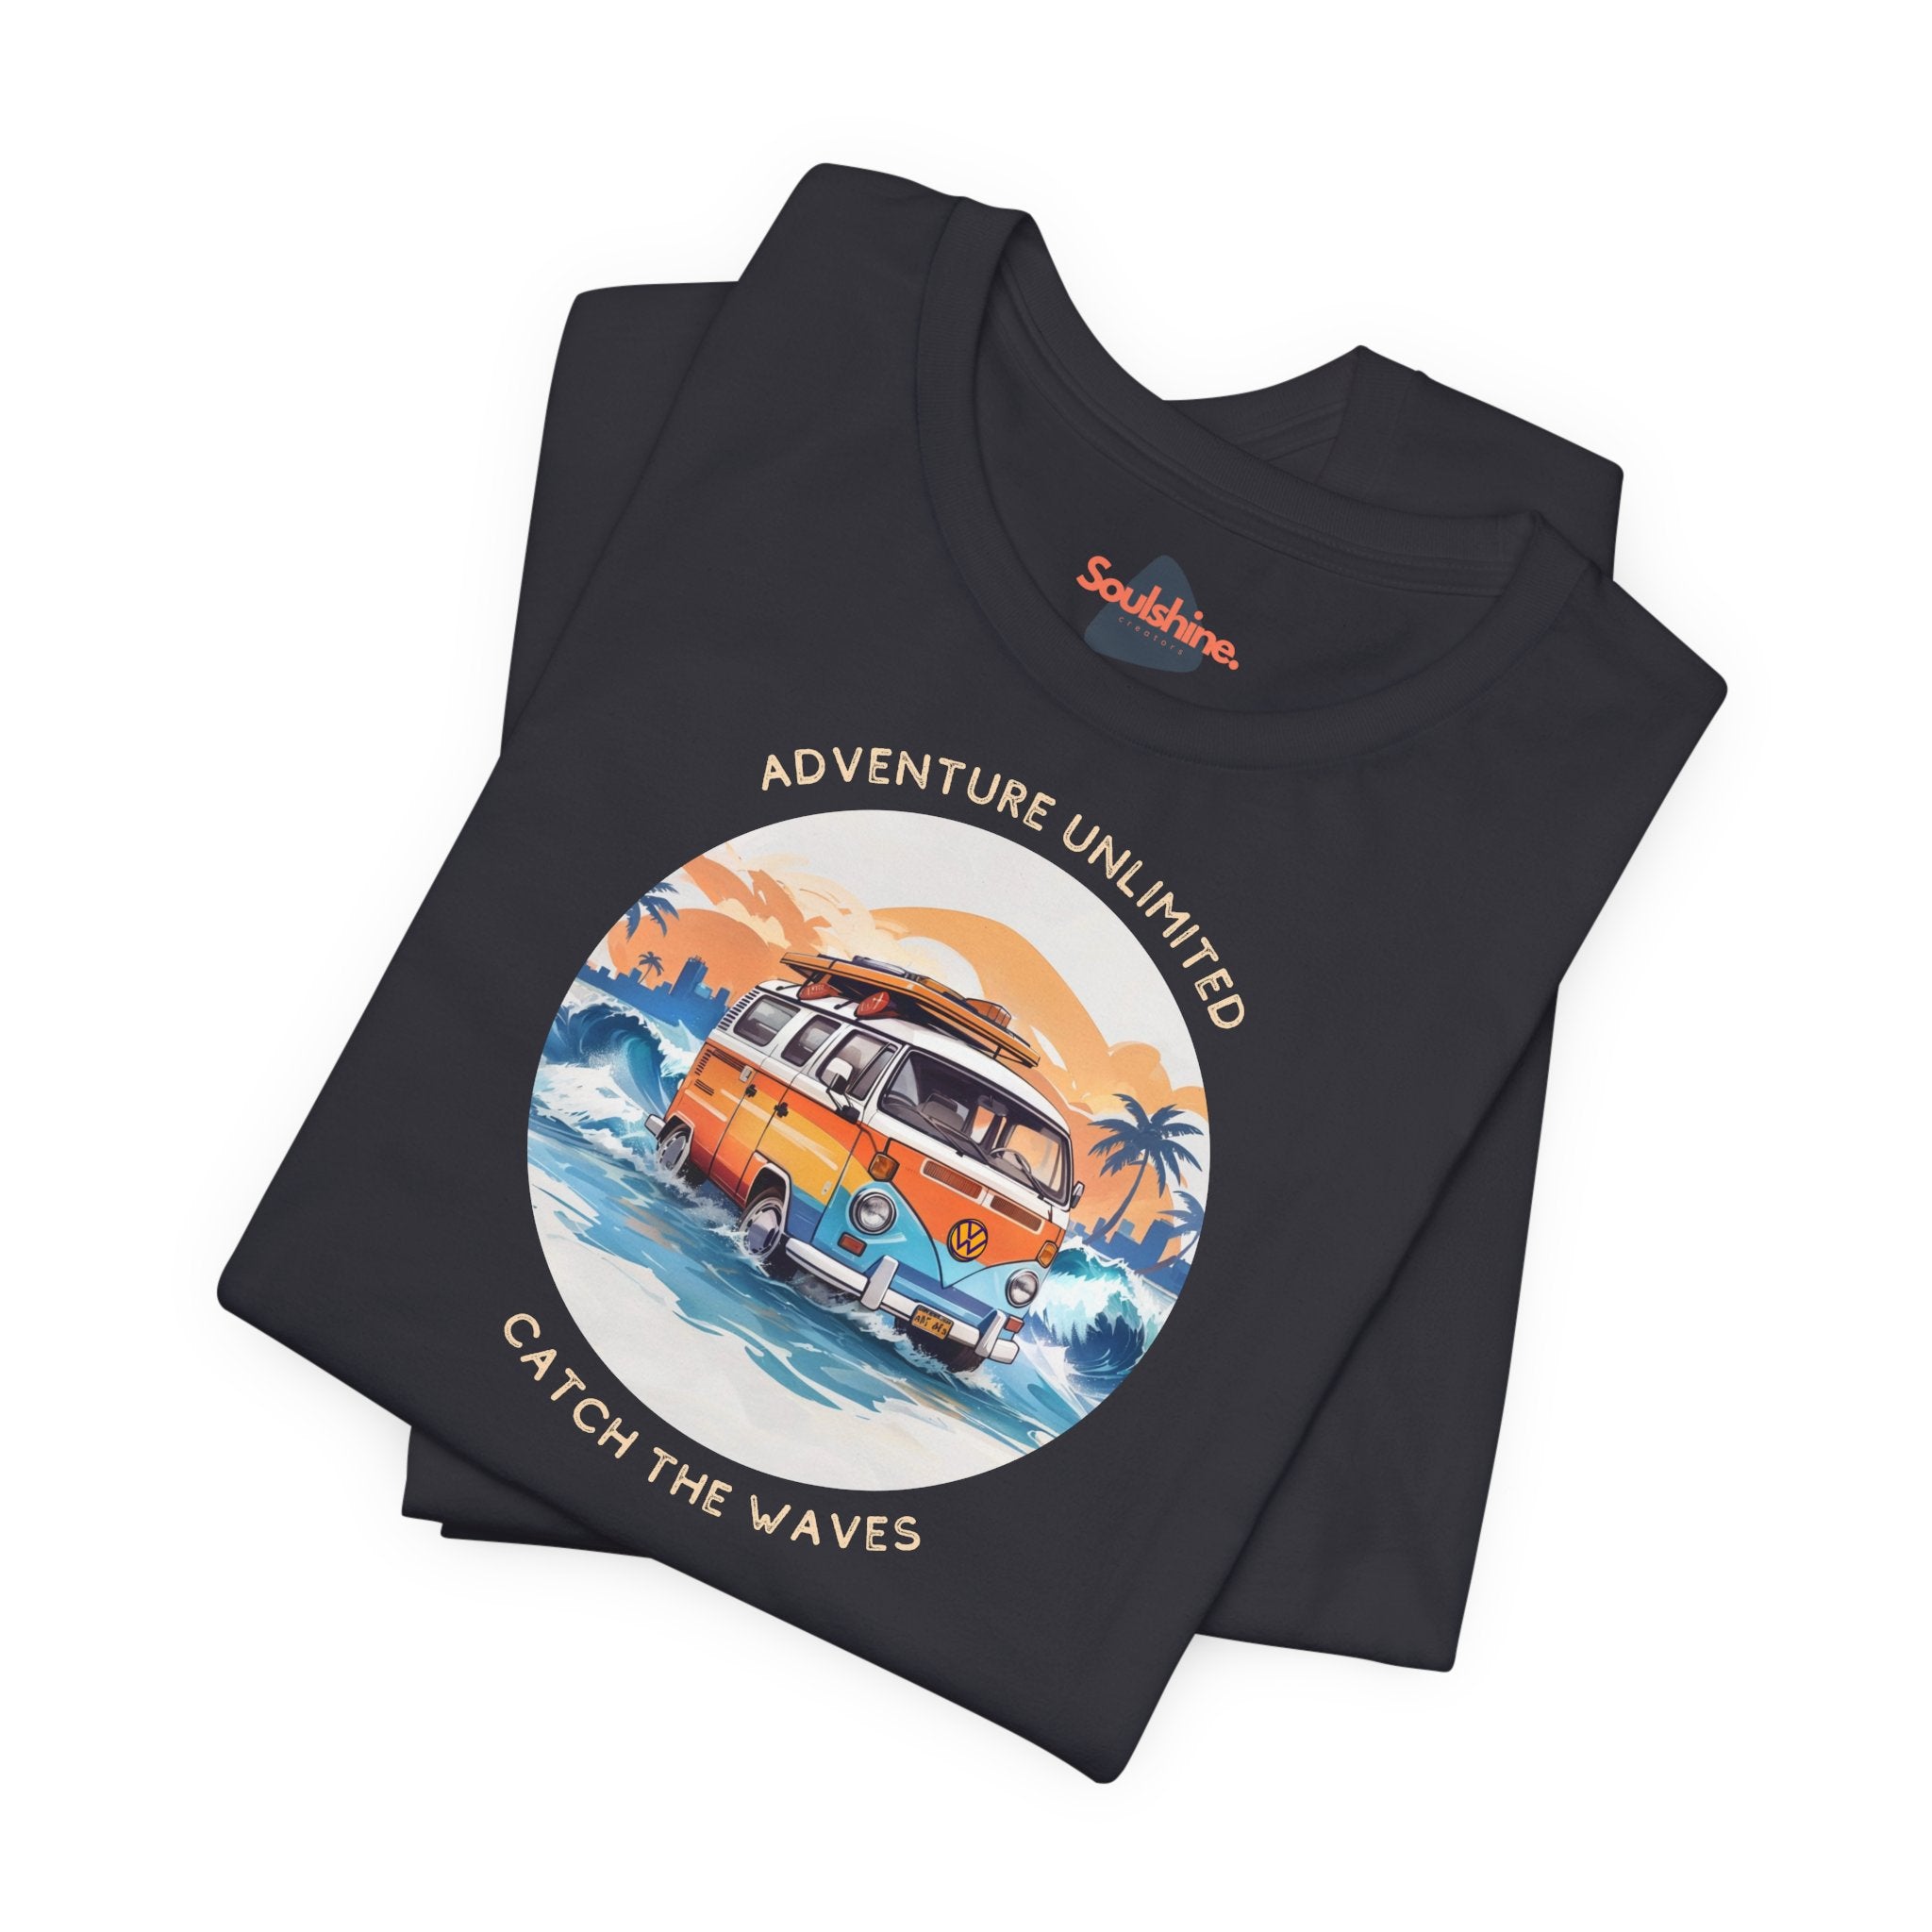 Adventure Unlimited Surfing T-Shirt printed on black Bella & Canvas EU item